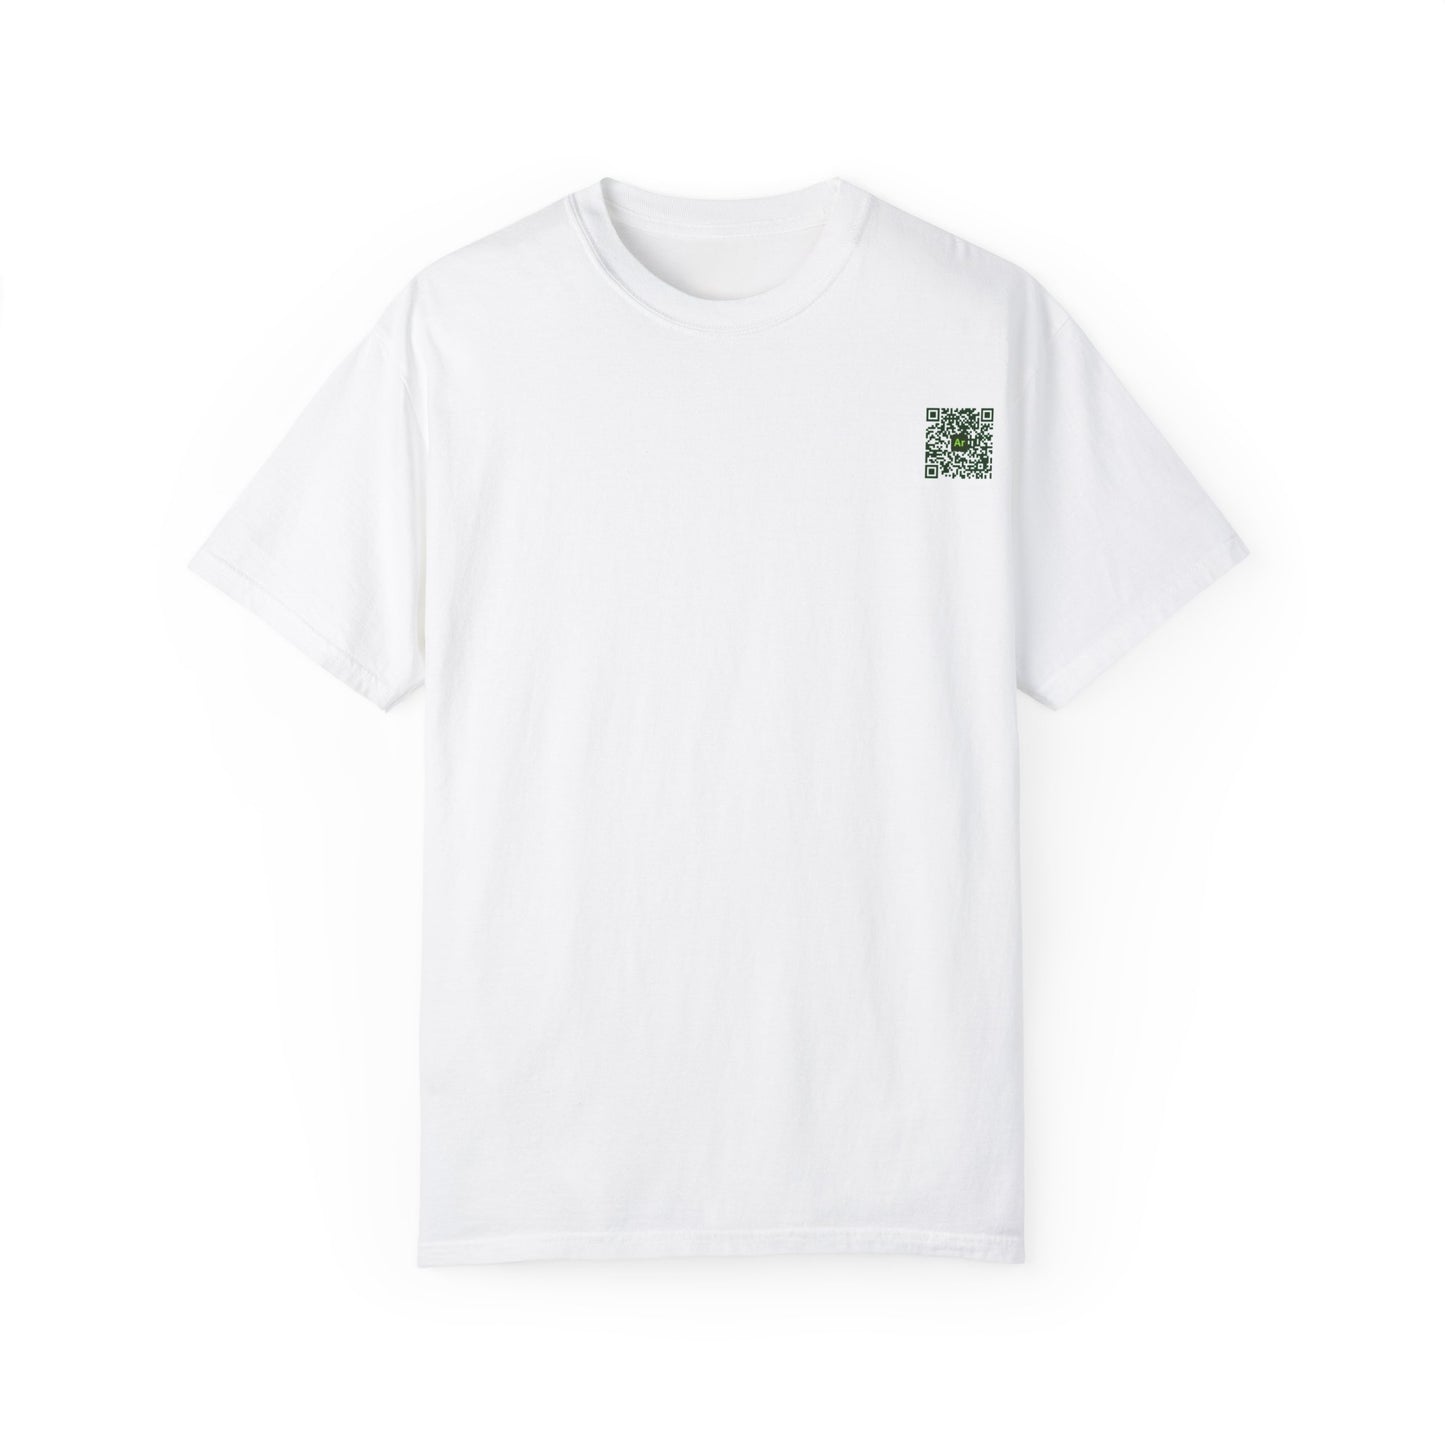 Whimsical - Unisex Garment-Dyed T-shirt